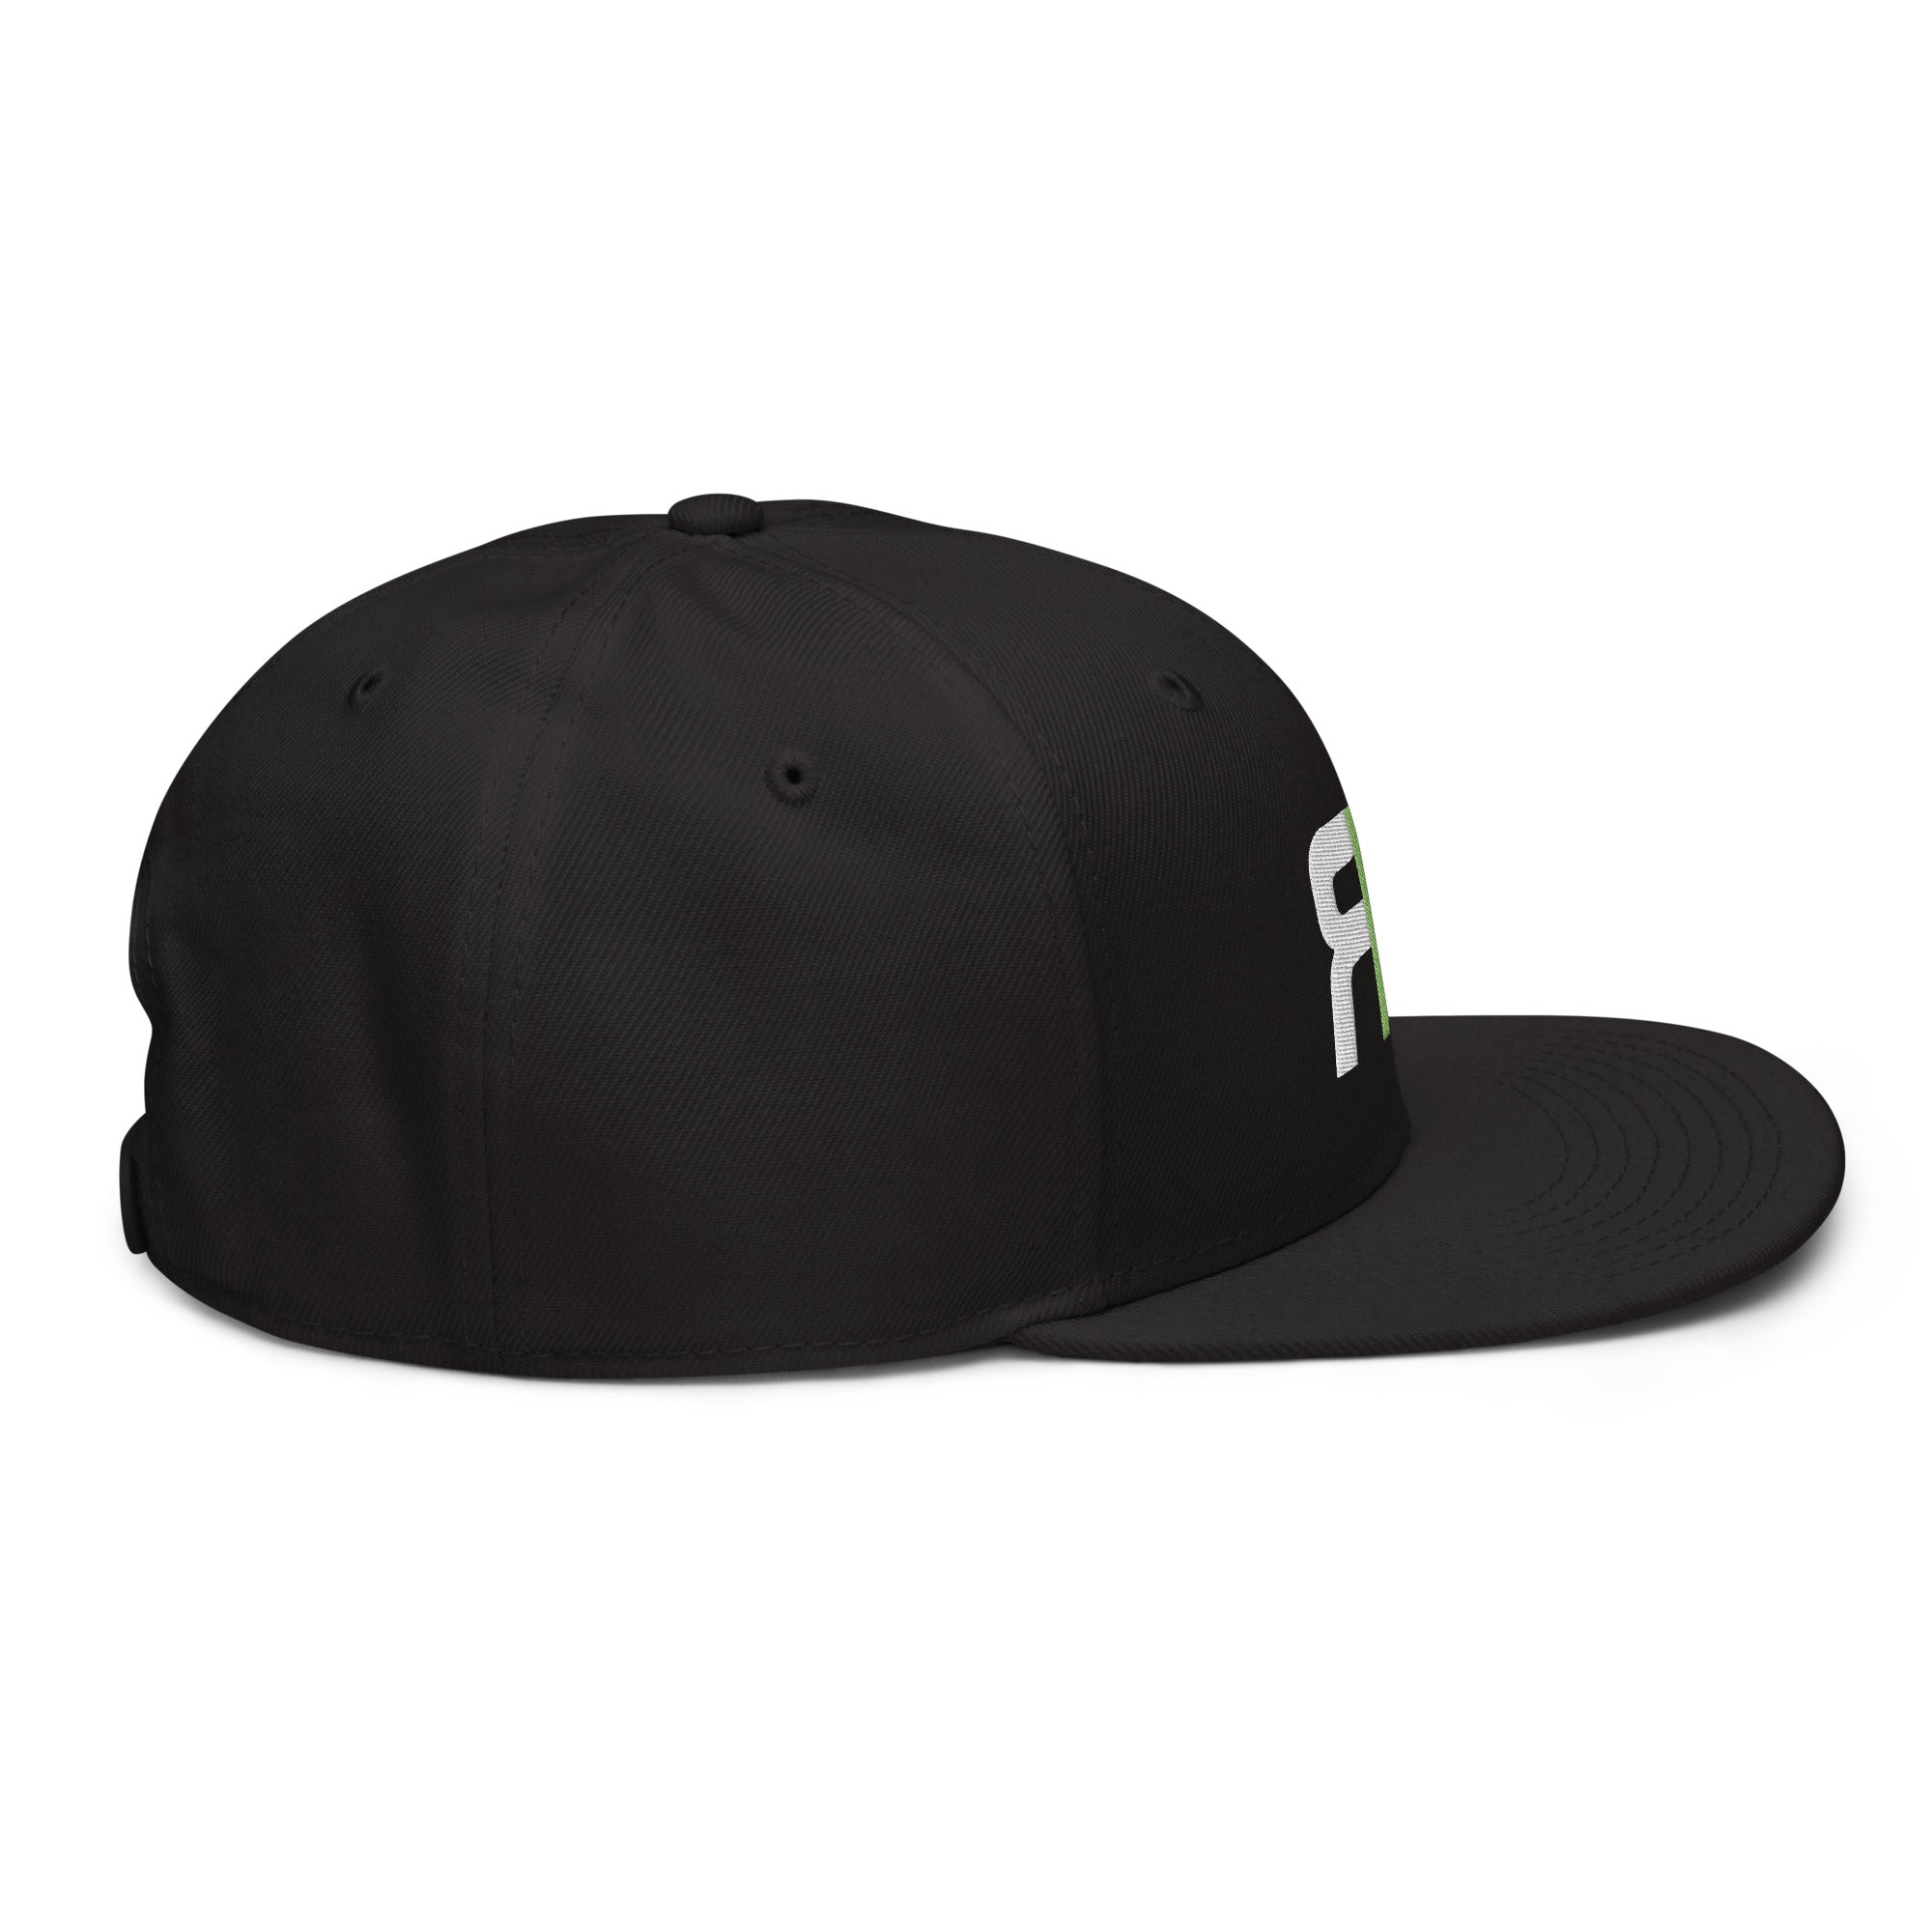 RFR (Green) Snapback Hat